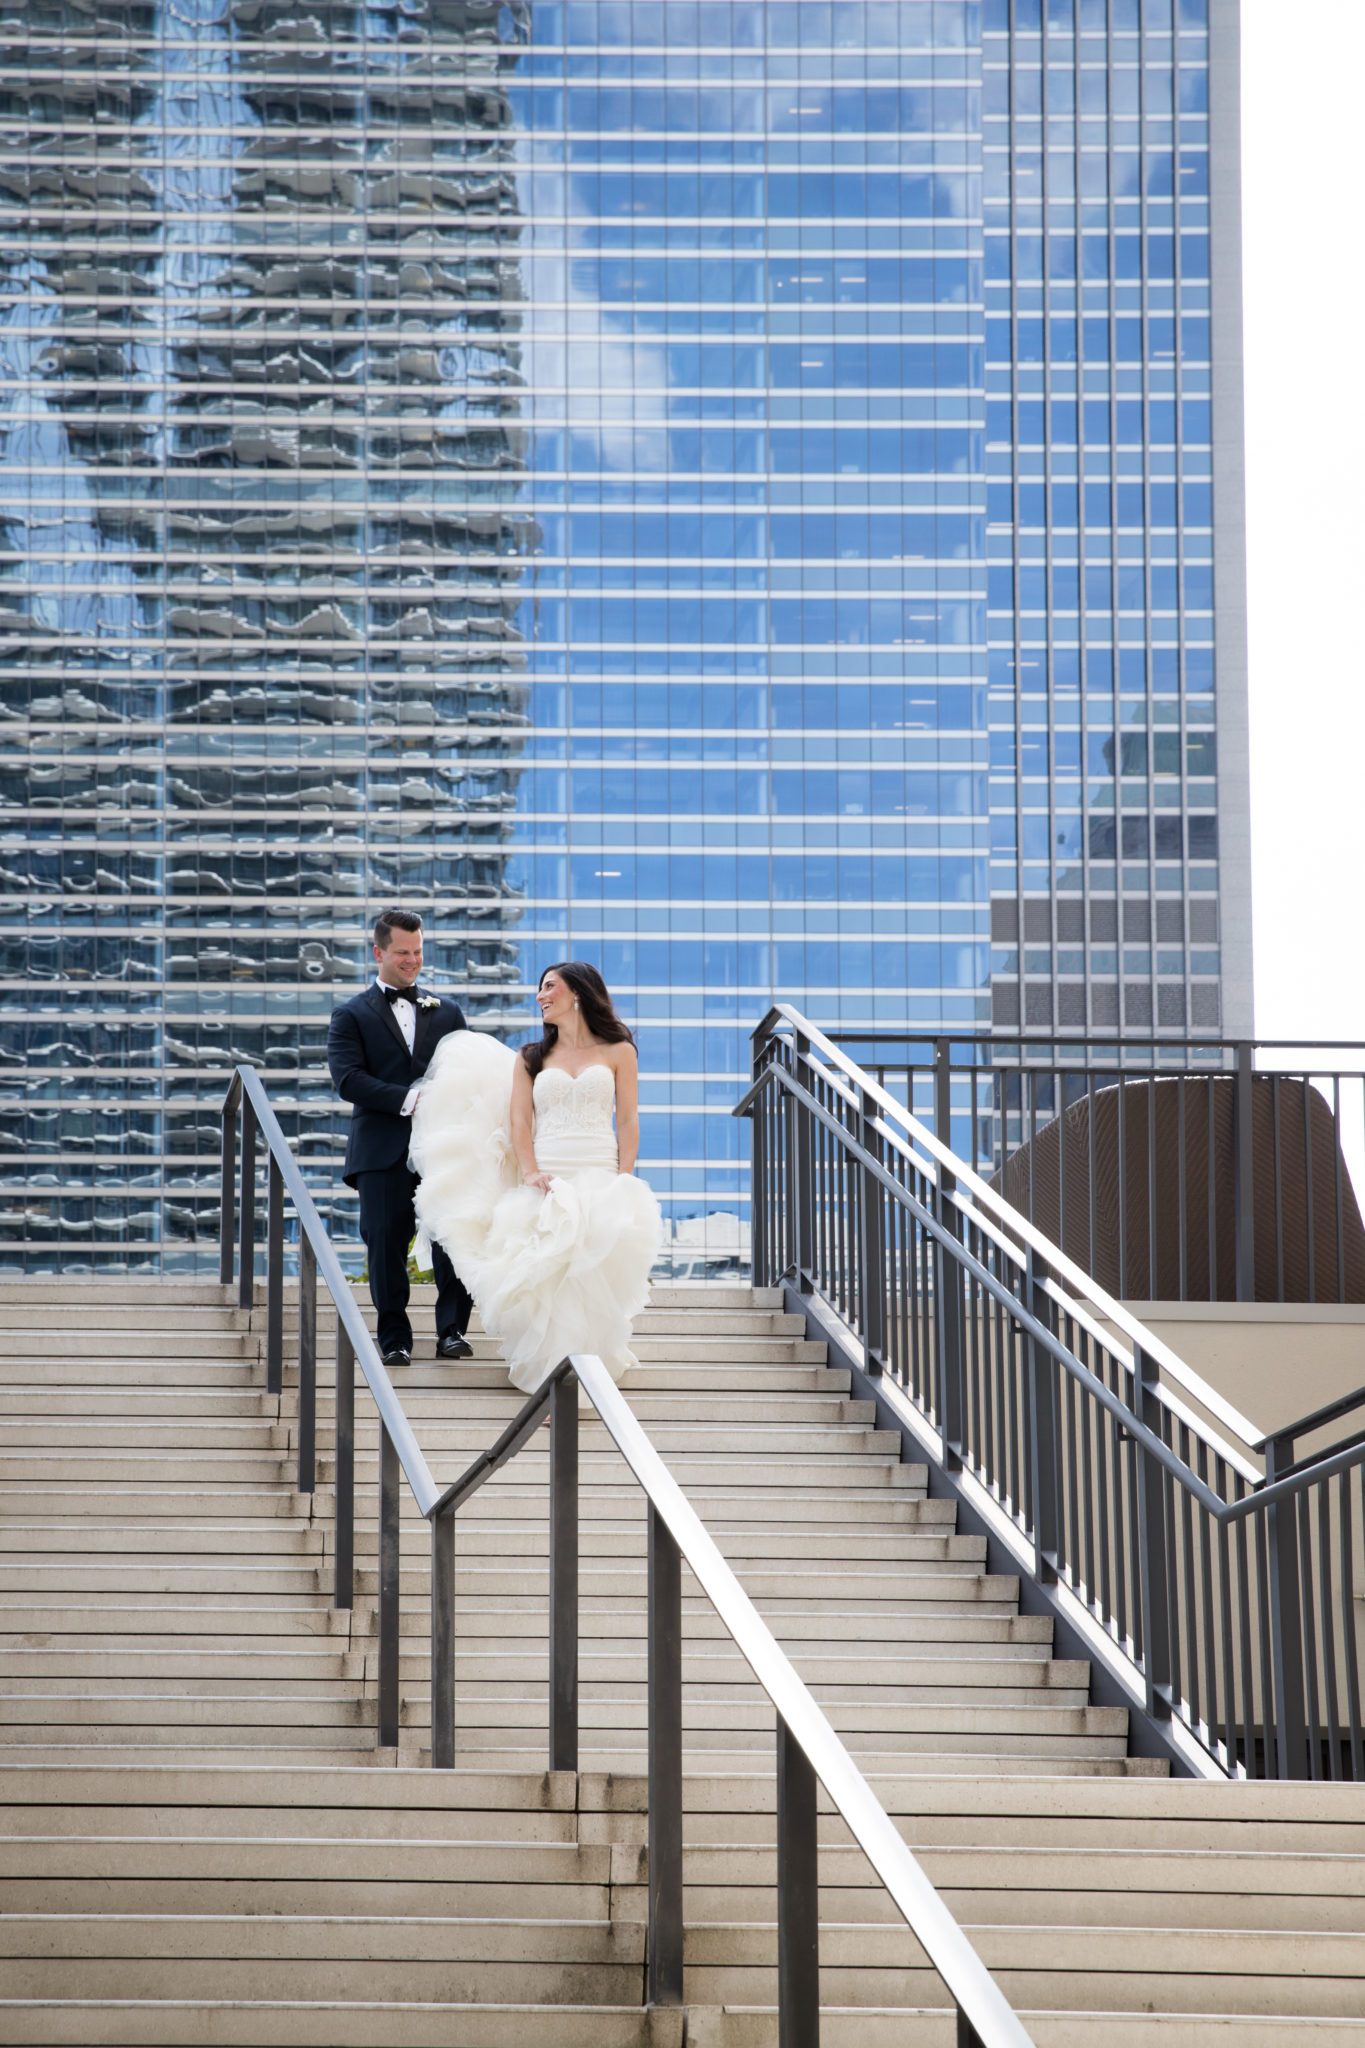 Lauren + Paul:  A Radisson Blu Aqua Chicago Wedding